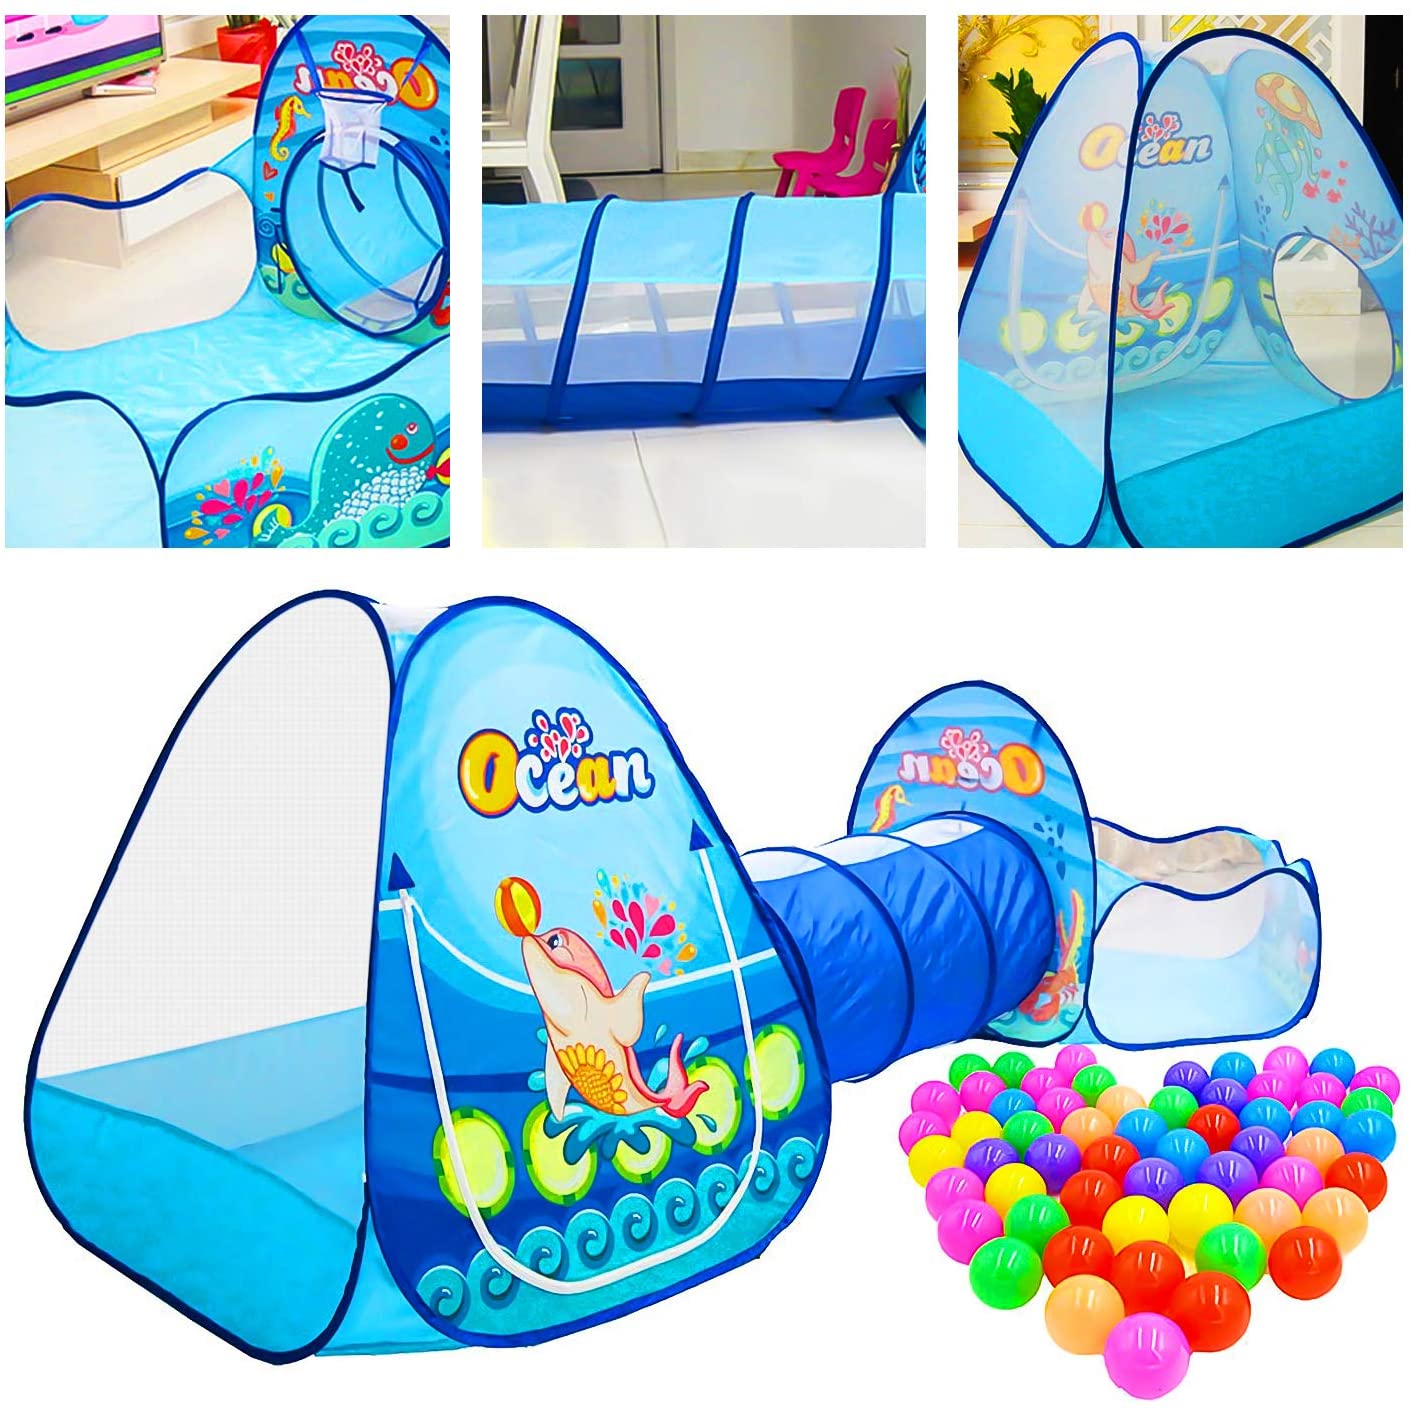 WeiMay Bambini Ocean Ball Game Gioca Tent Tunnel Pool Hoop in Outdoor e Indoor Palle da Gioco Non Incluse 